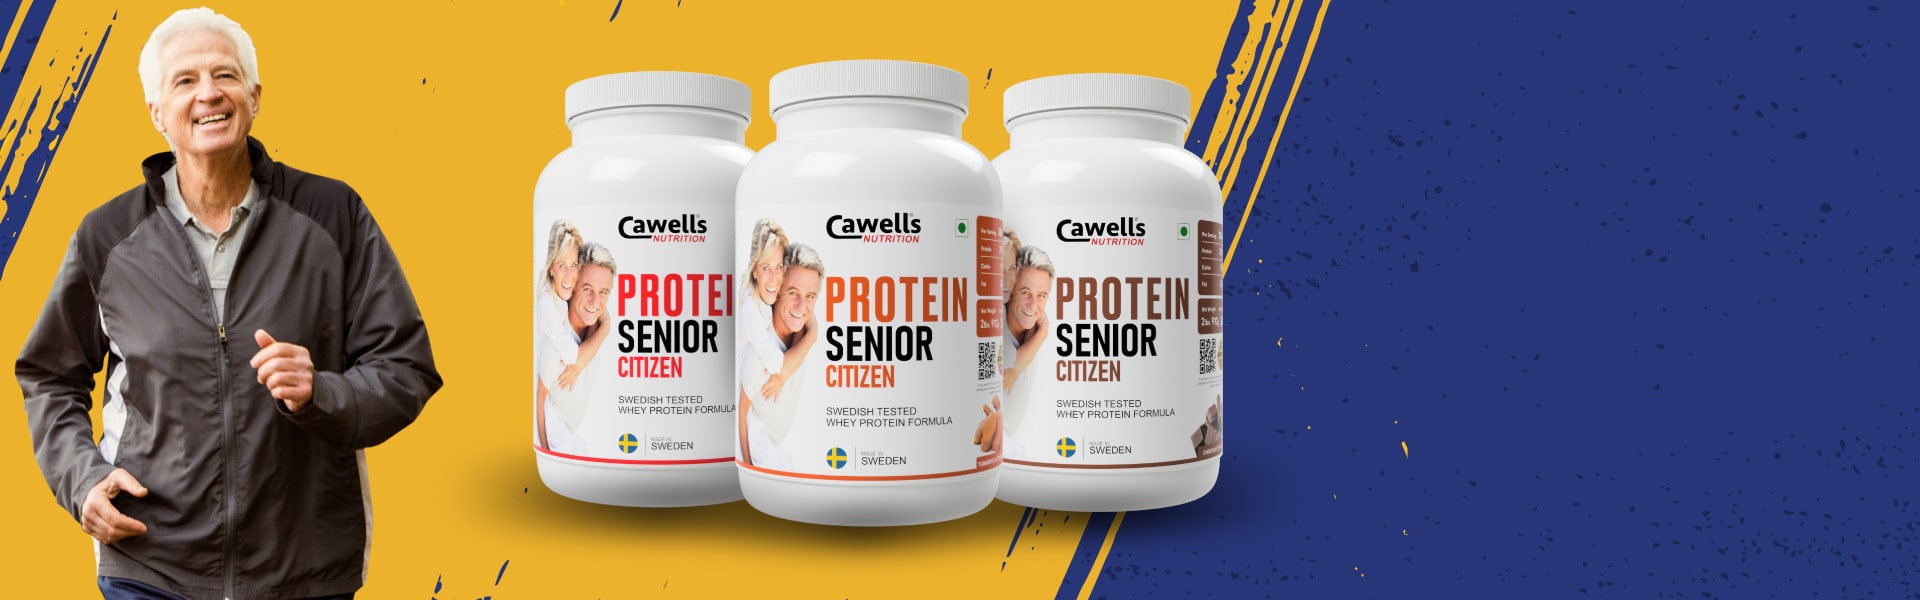 protein powder for senior citizens